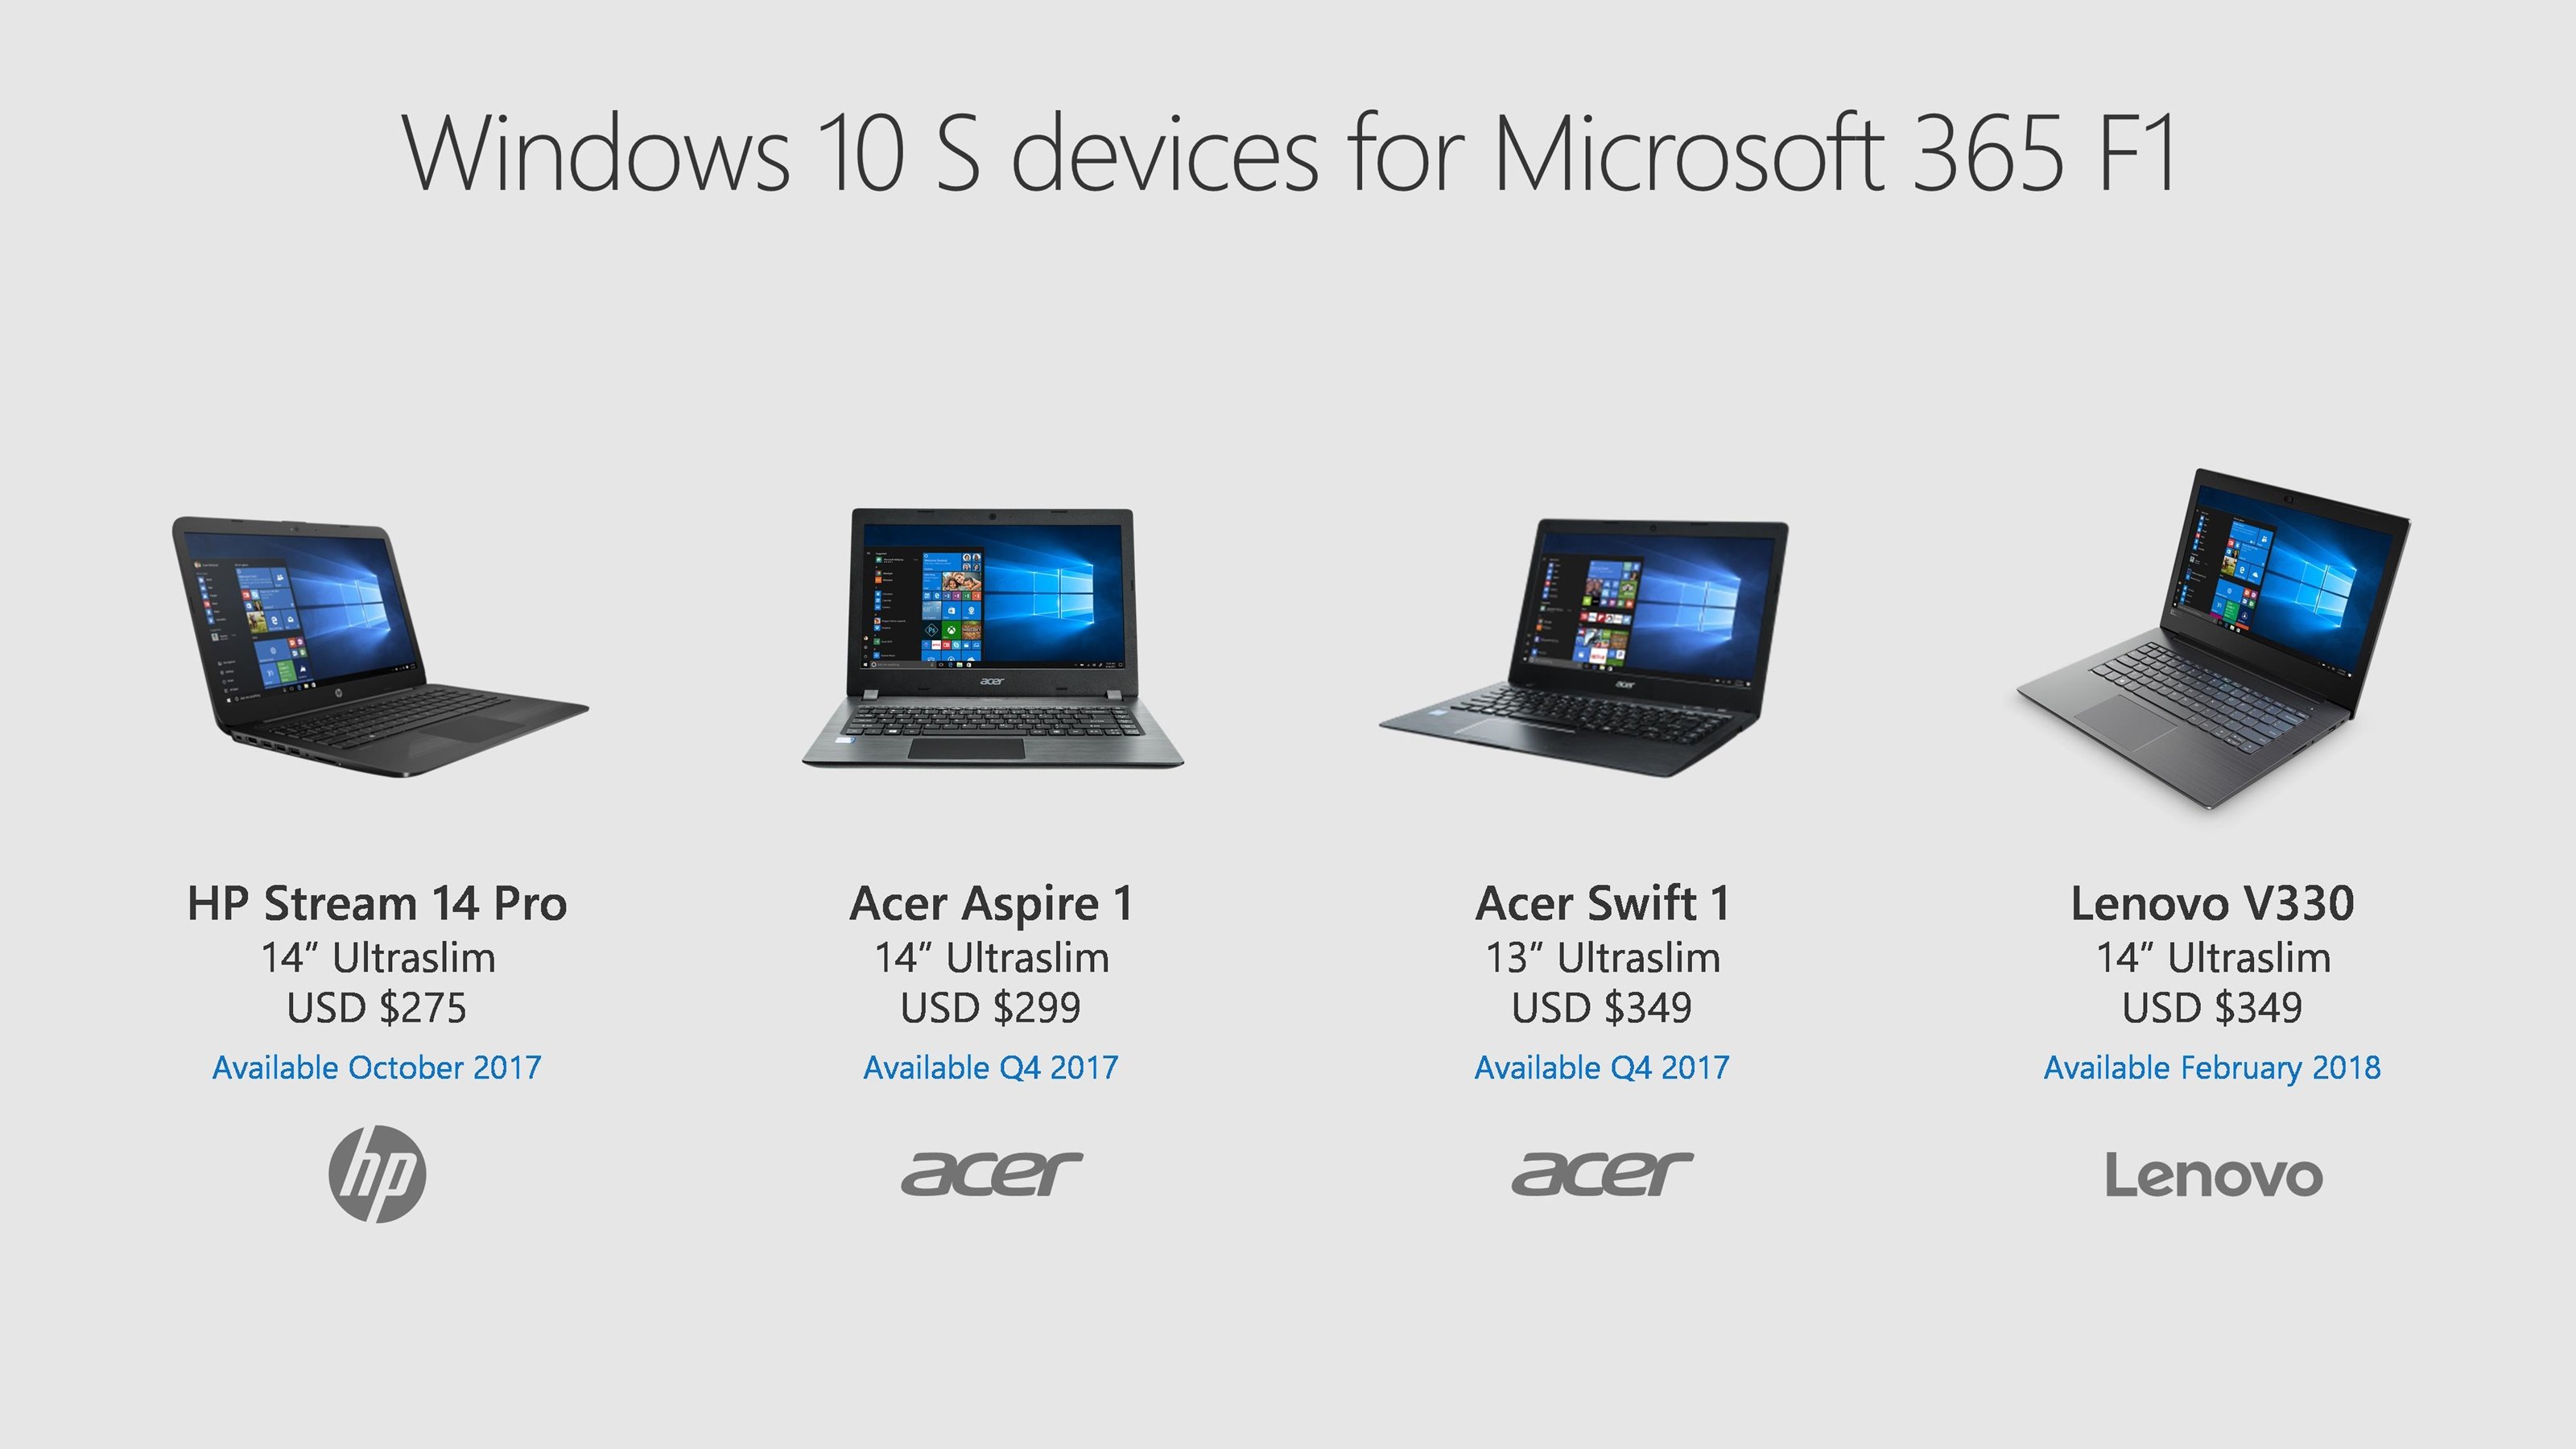 Novos PCs Windows 10 S